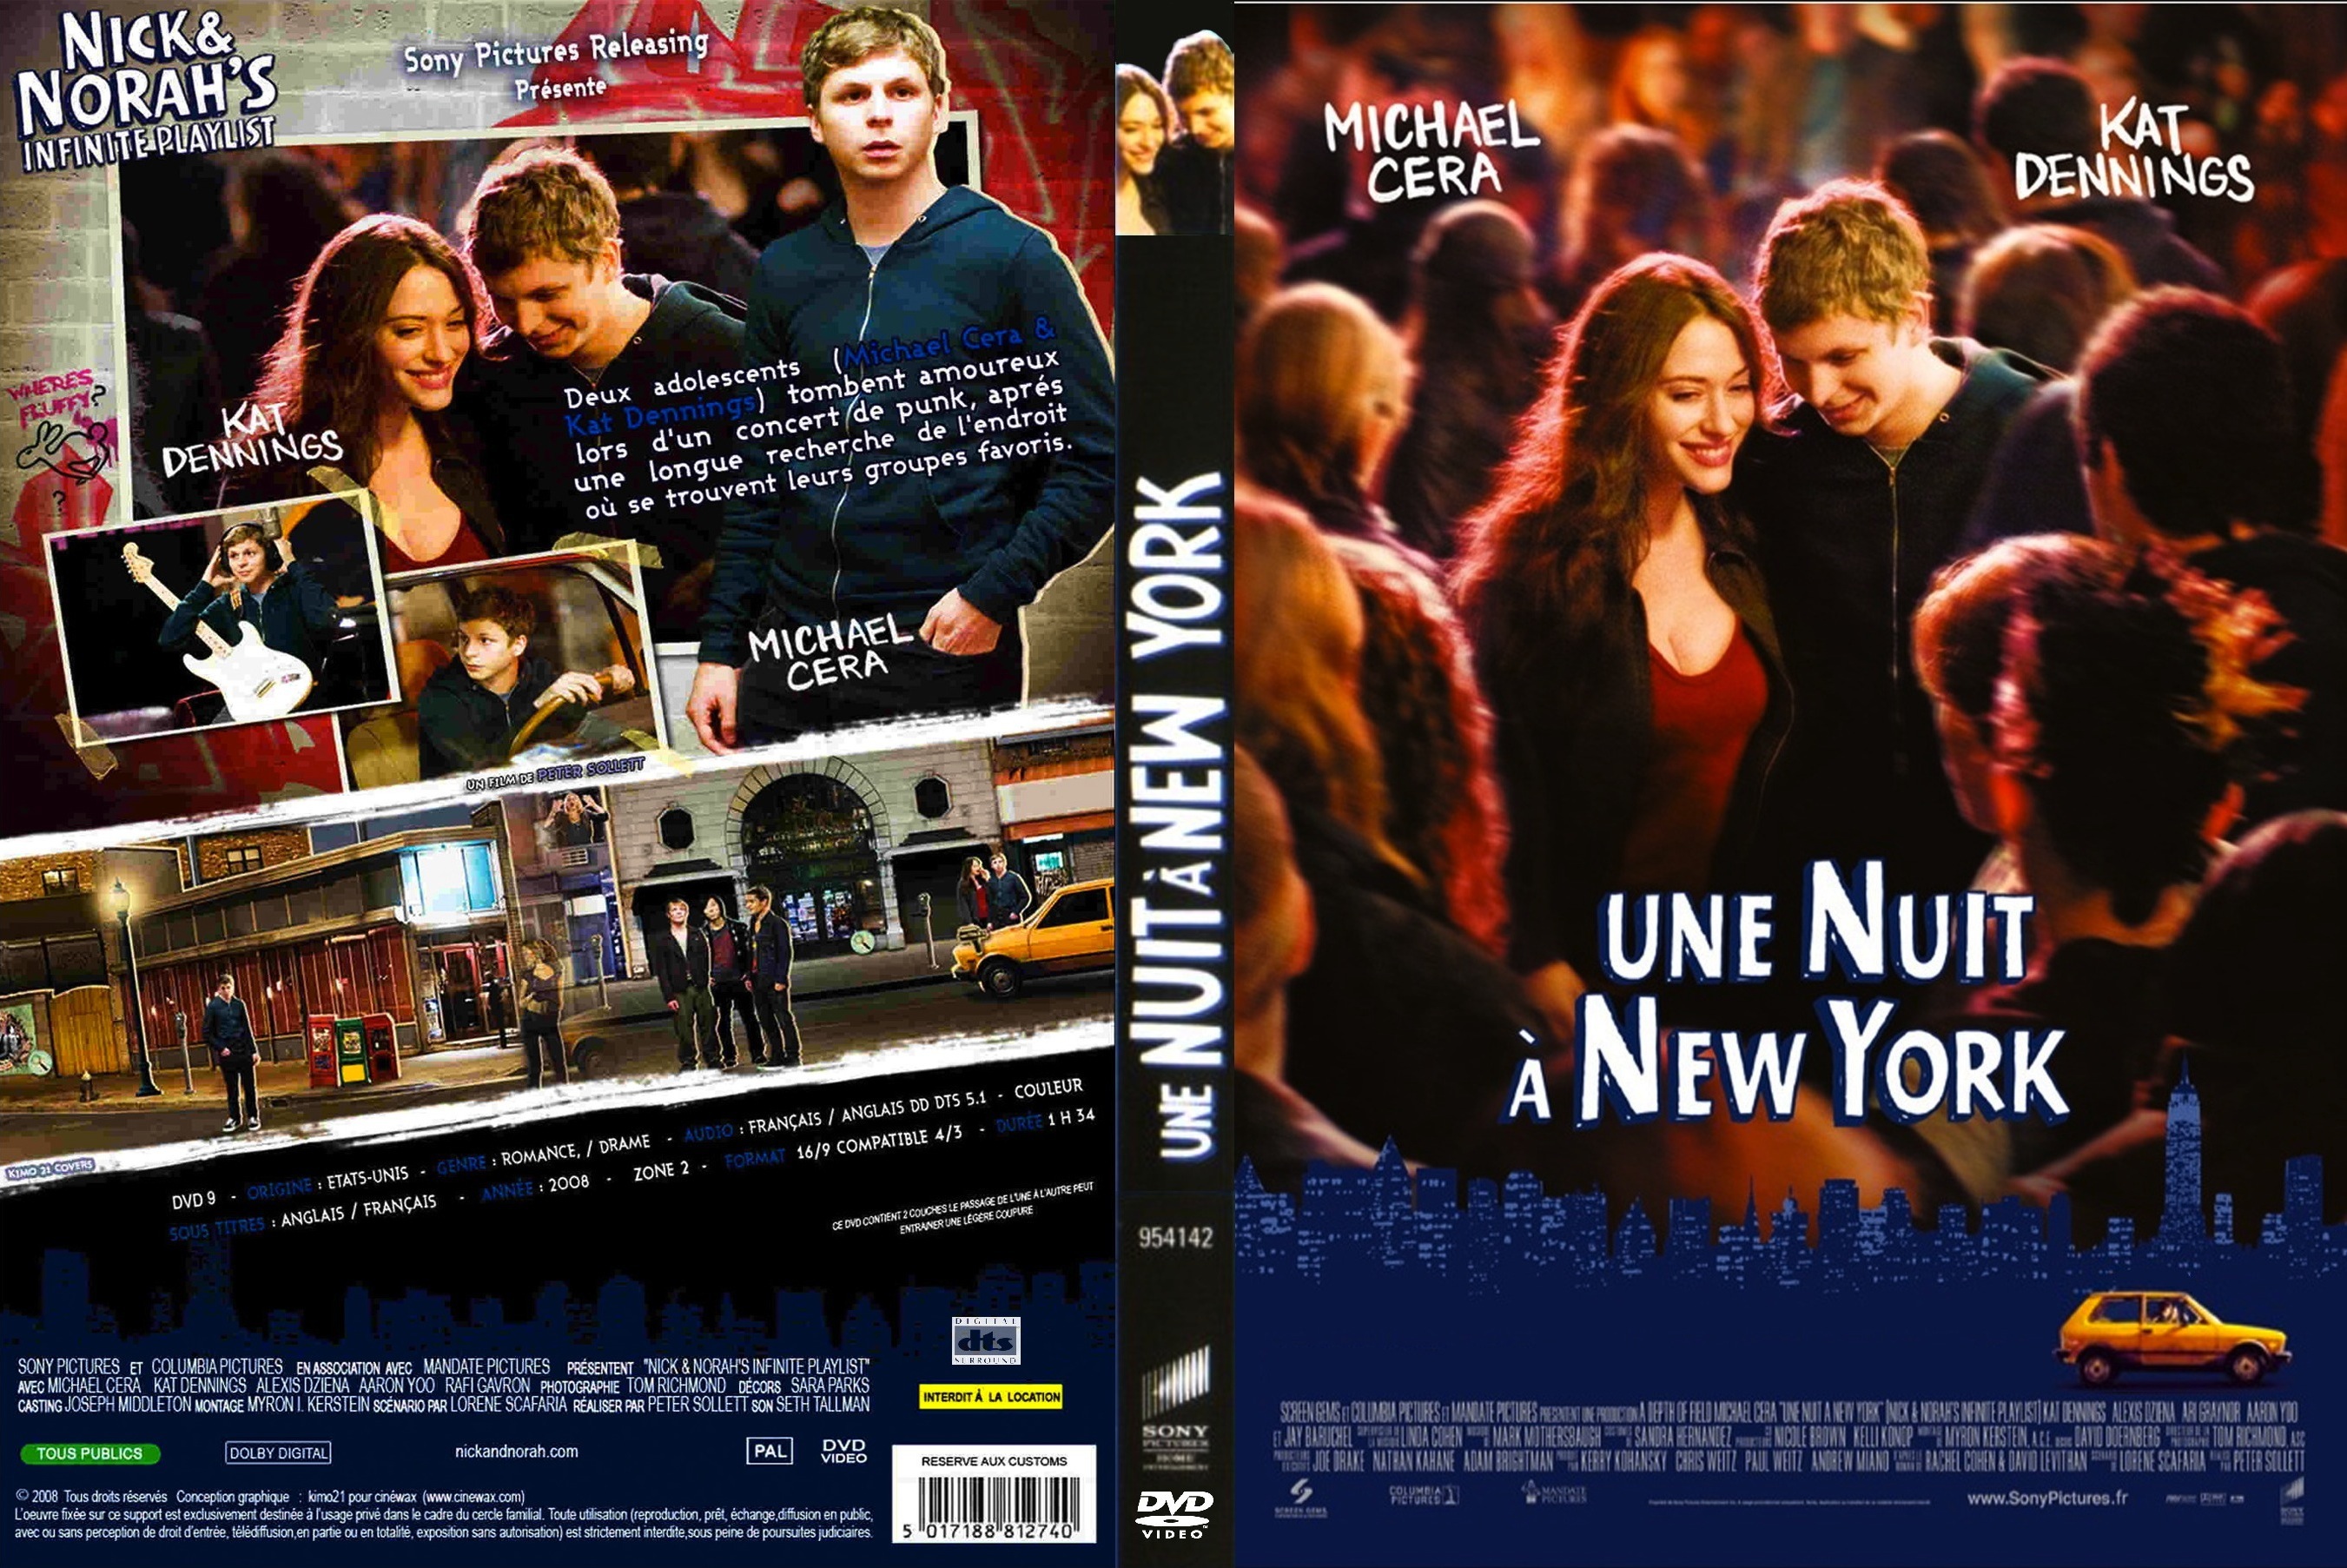 Jaquette DVD Une Nuit  New York custom